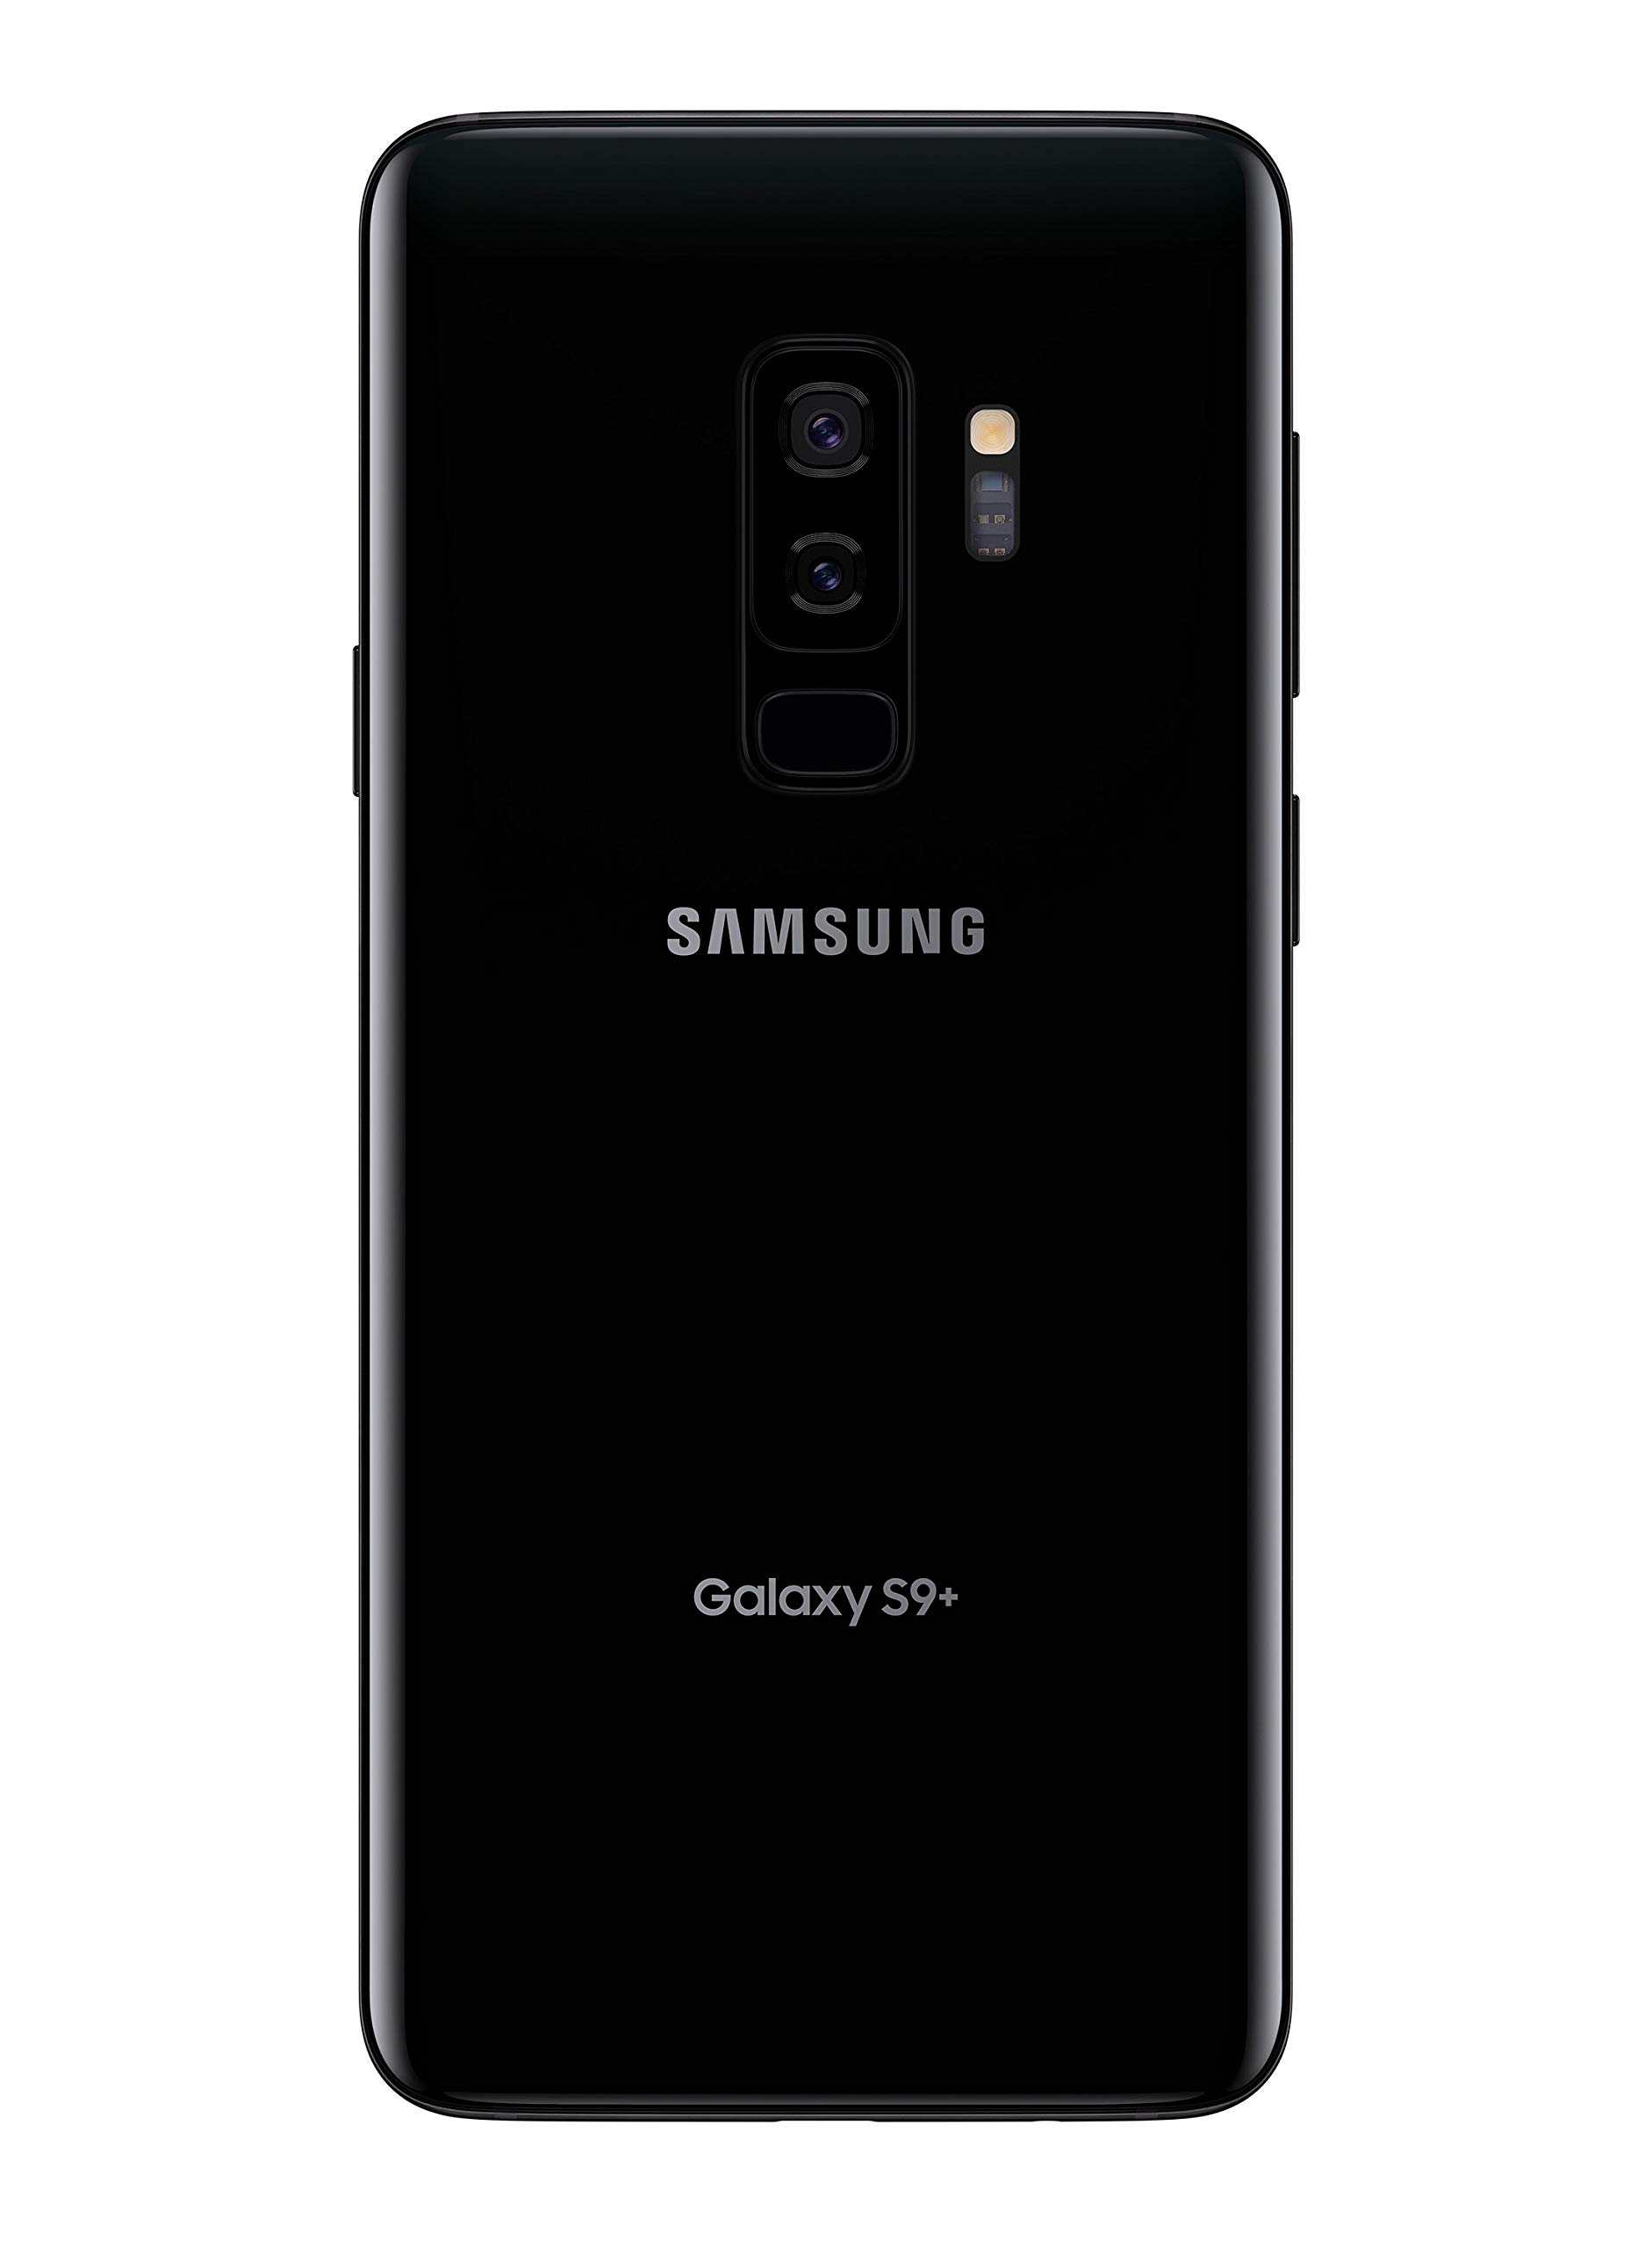 Samsung Galaxy S9+, 64GB, Midnight Black - Fully Unlocked (Renewed)